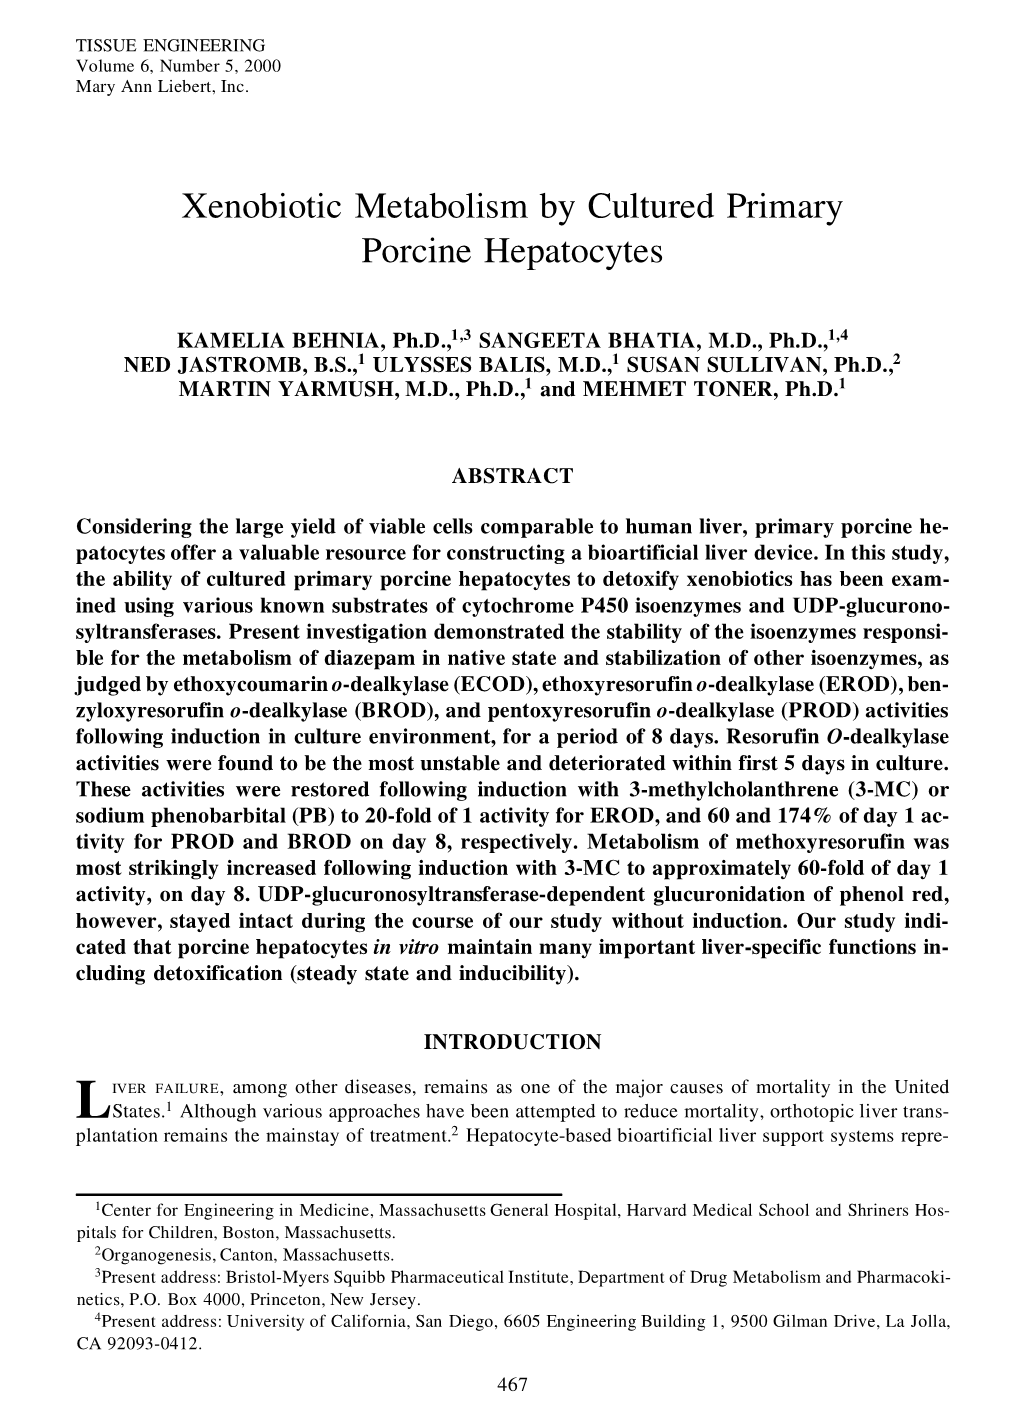 Xenobiotic Metabolism by Cultured Primary Porcine Hepatocytes